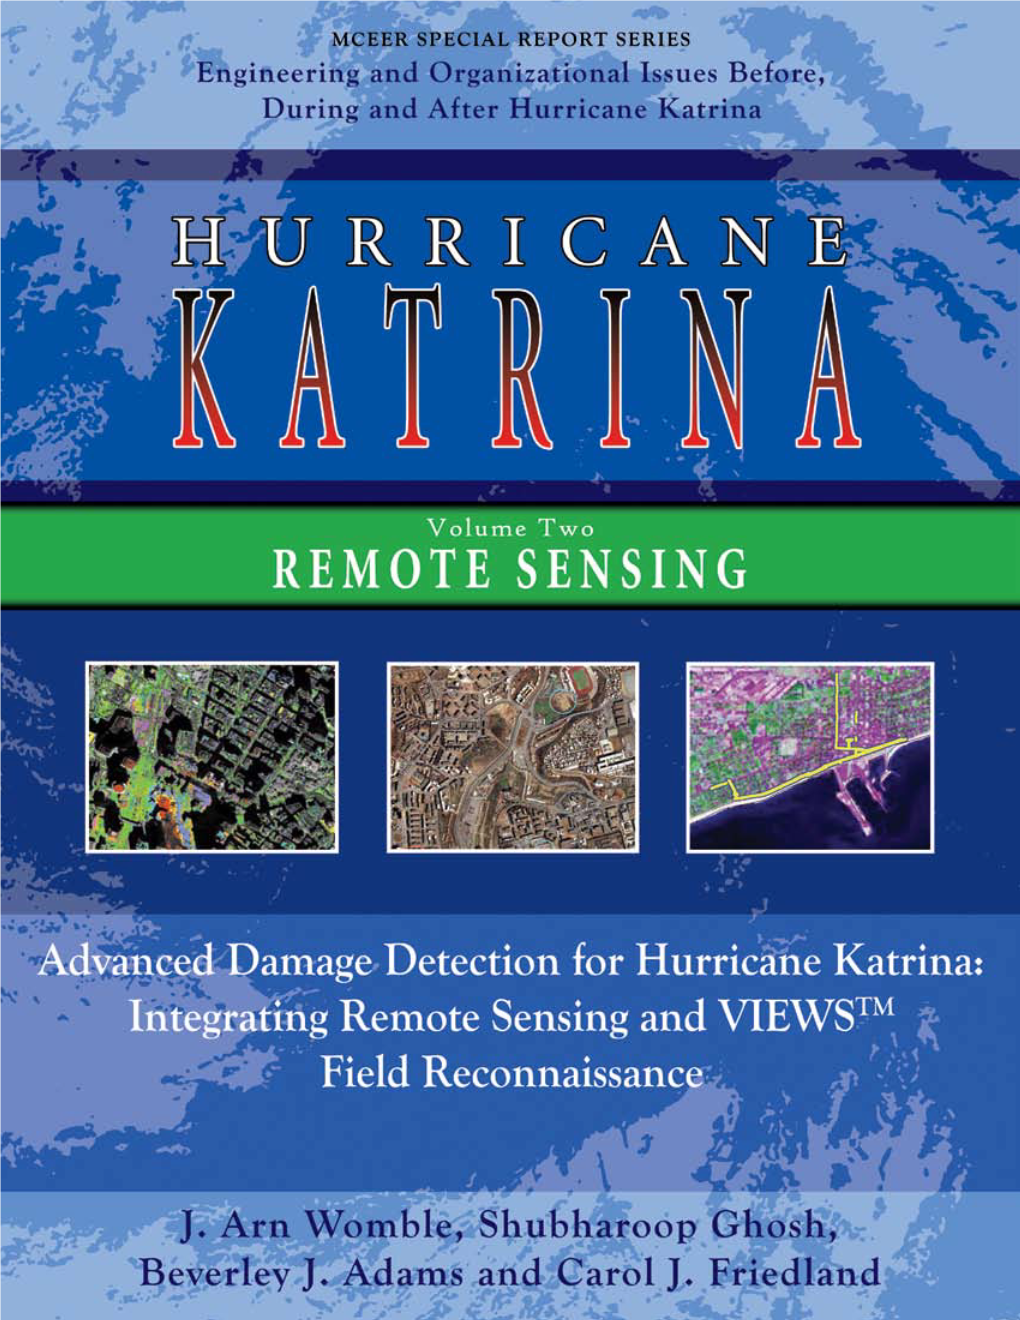 Advanced Damage Detection for Hurricane Katrina: Integrating Remote Sensing and VIEWSTM Field Reconnaissance